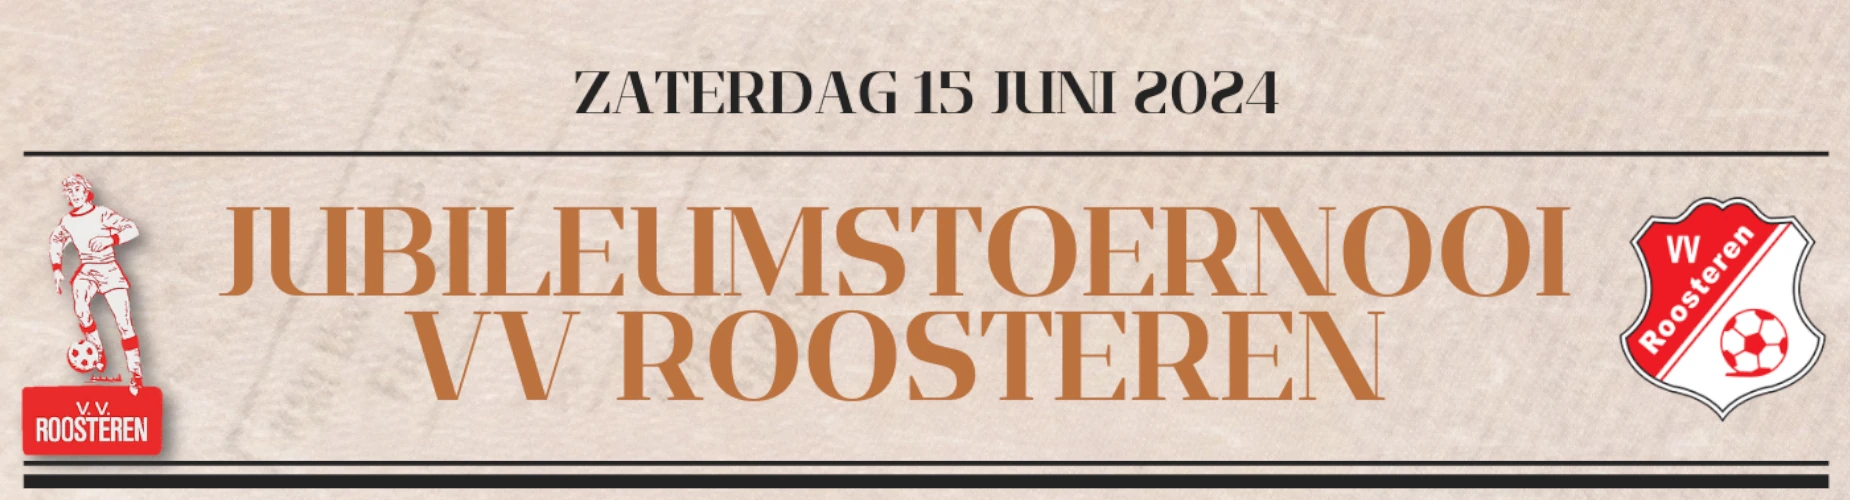 Banner - JO14 - Jubileumtoernooi VV Roosteren - VV Roosteren - Roosteren